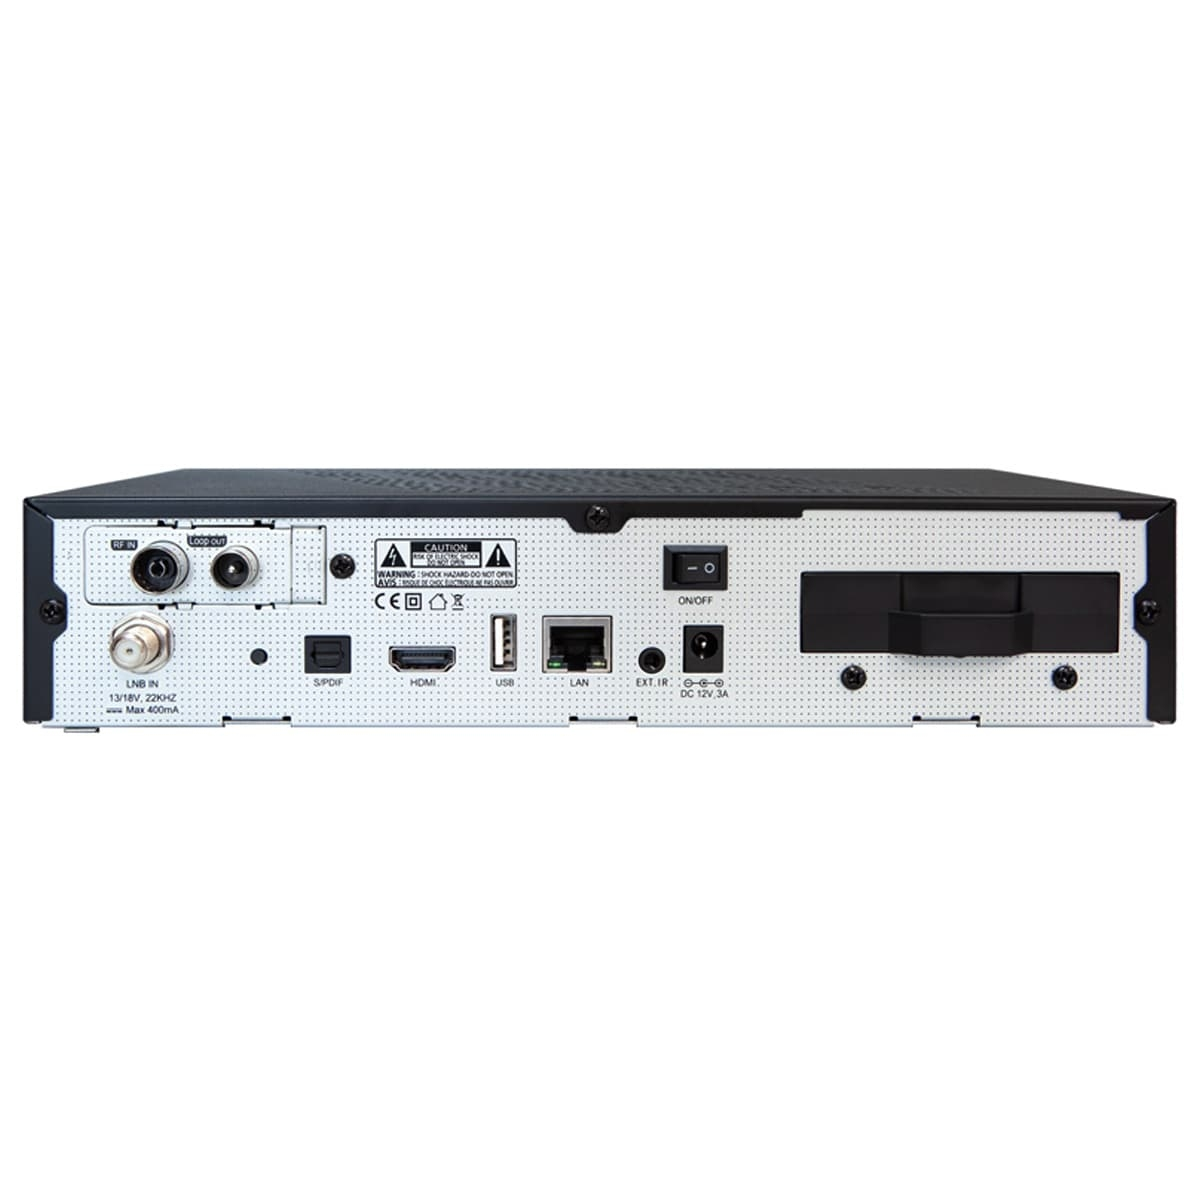 PULSe Tuner, Combo Sat-Receiver Schwarz) 4K DVB-S2X AB-COM 500GB DVB-C/T2 (PVR-Funktion, Twin